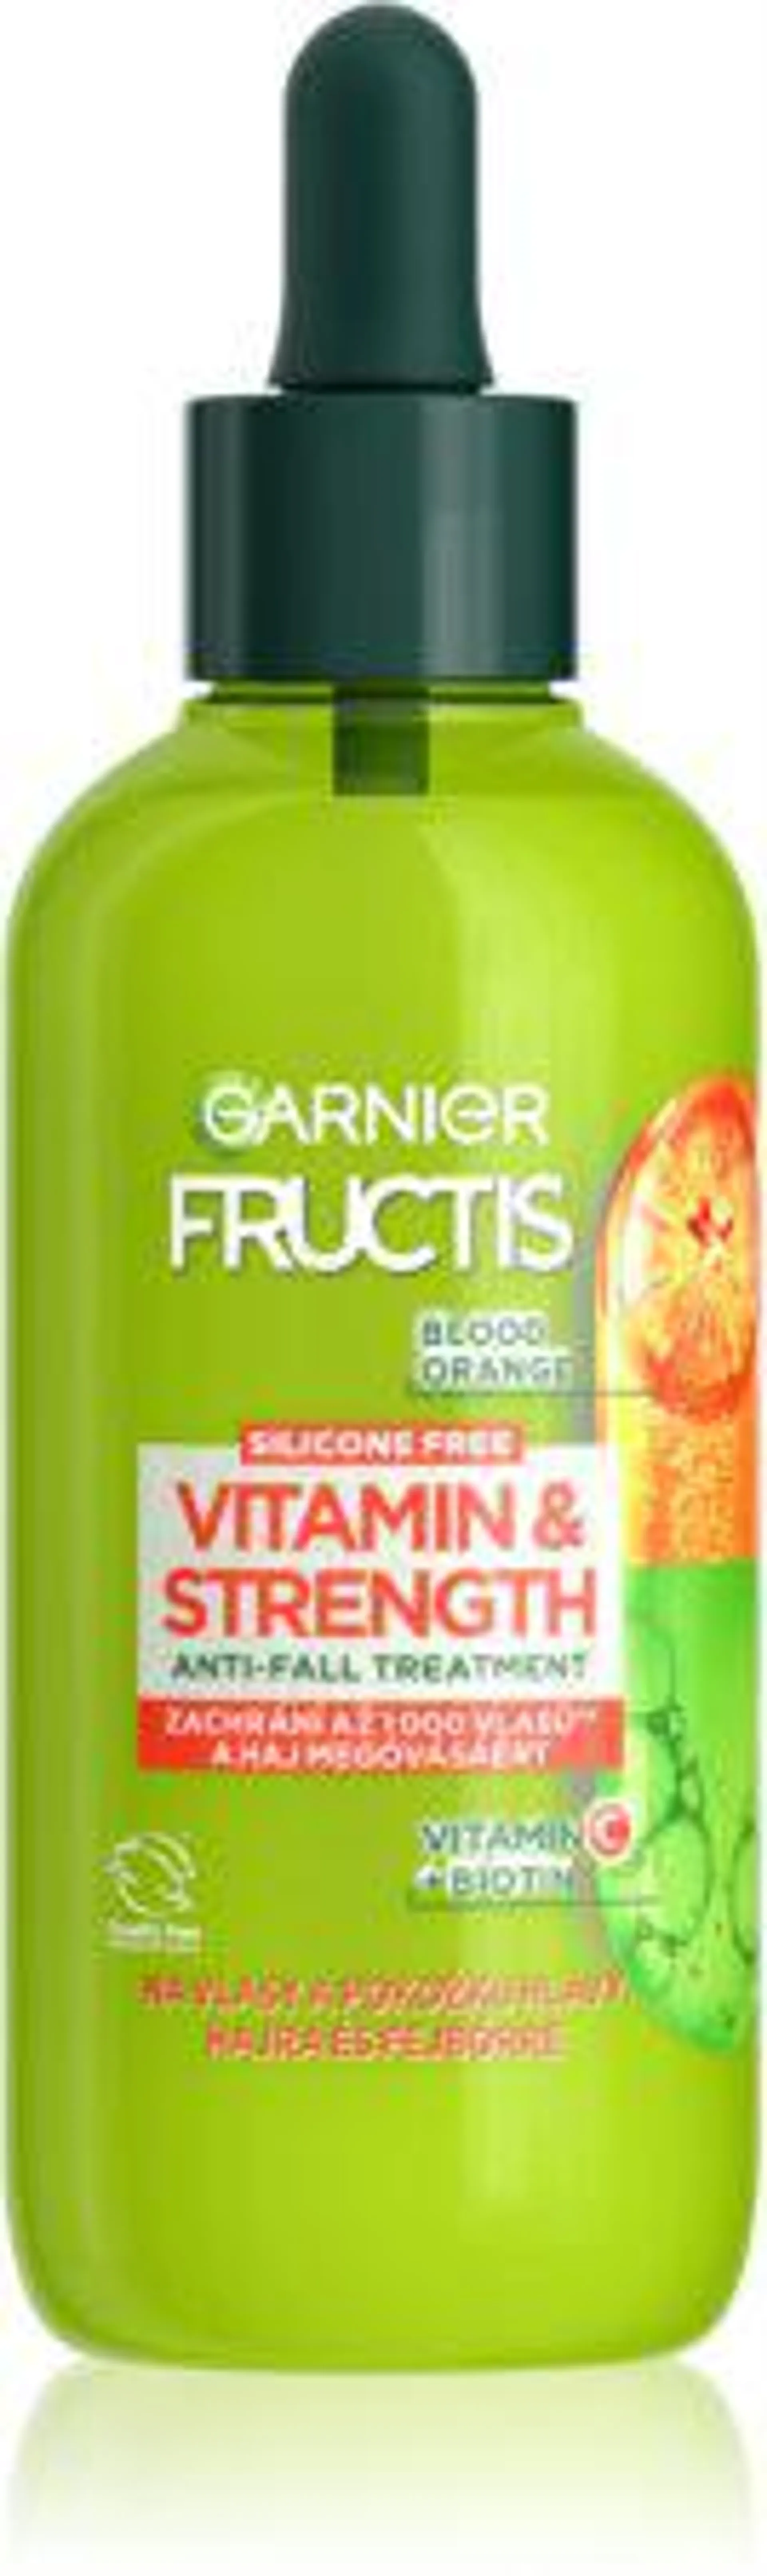 Fructis Vitamin & Strength